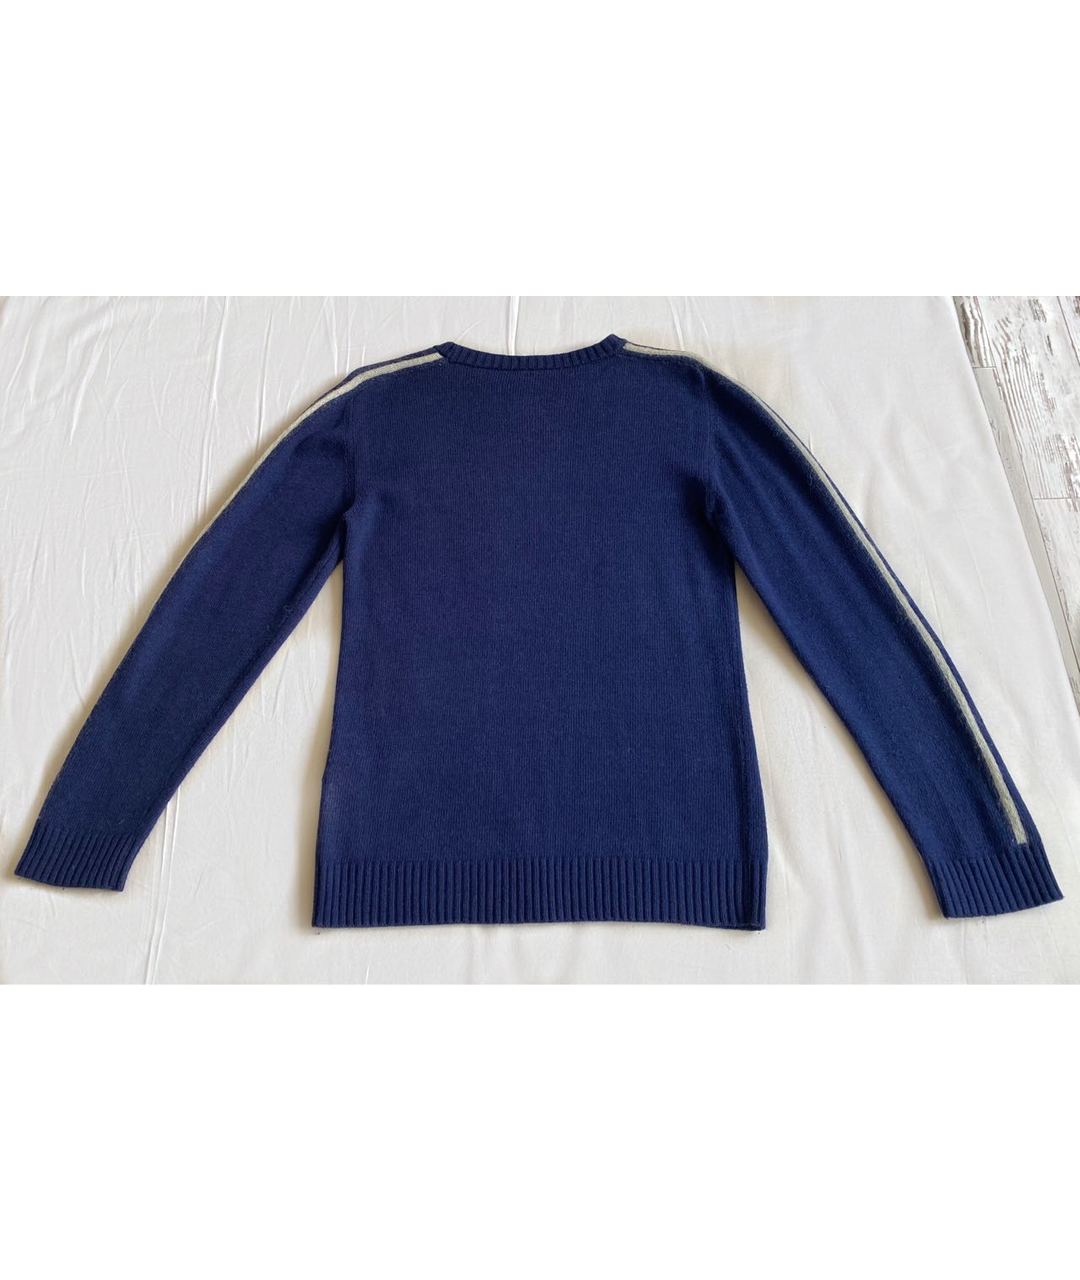 NO. 21 Синий шерстяной джемпер / свитер, фото 2